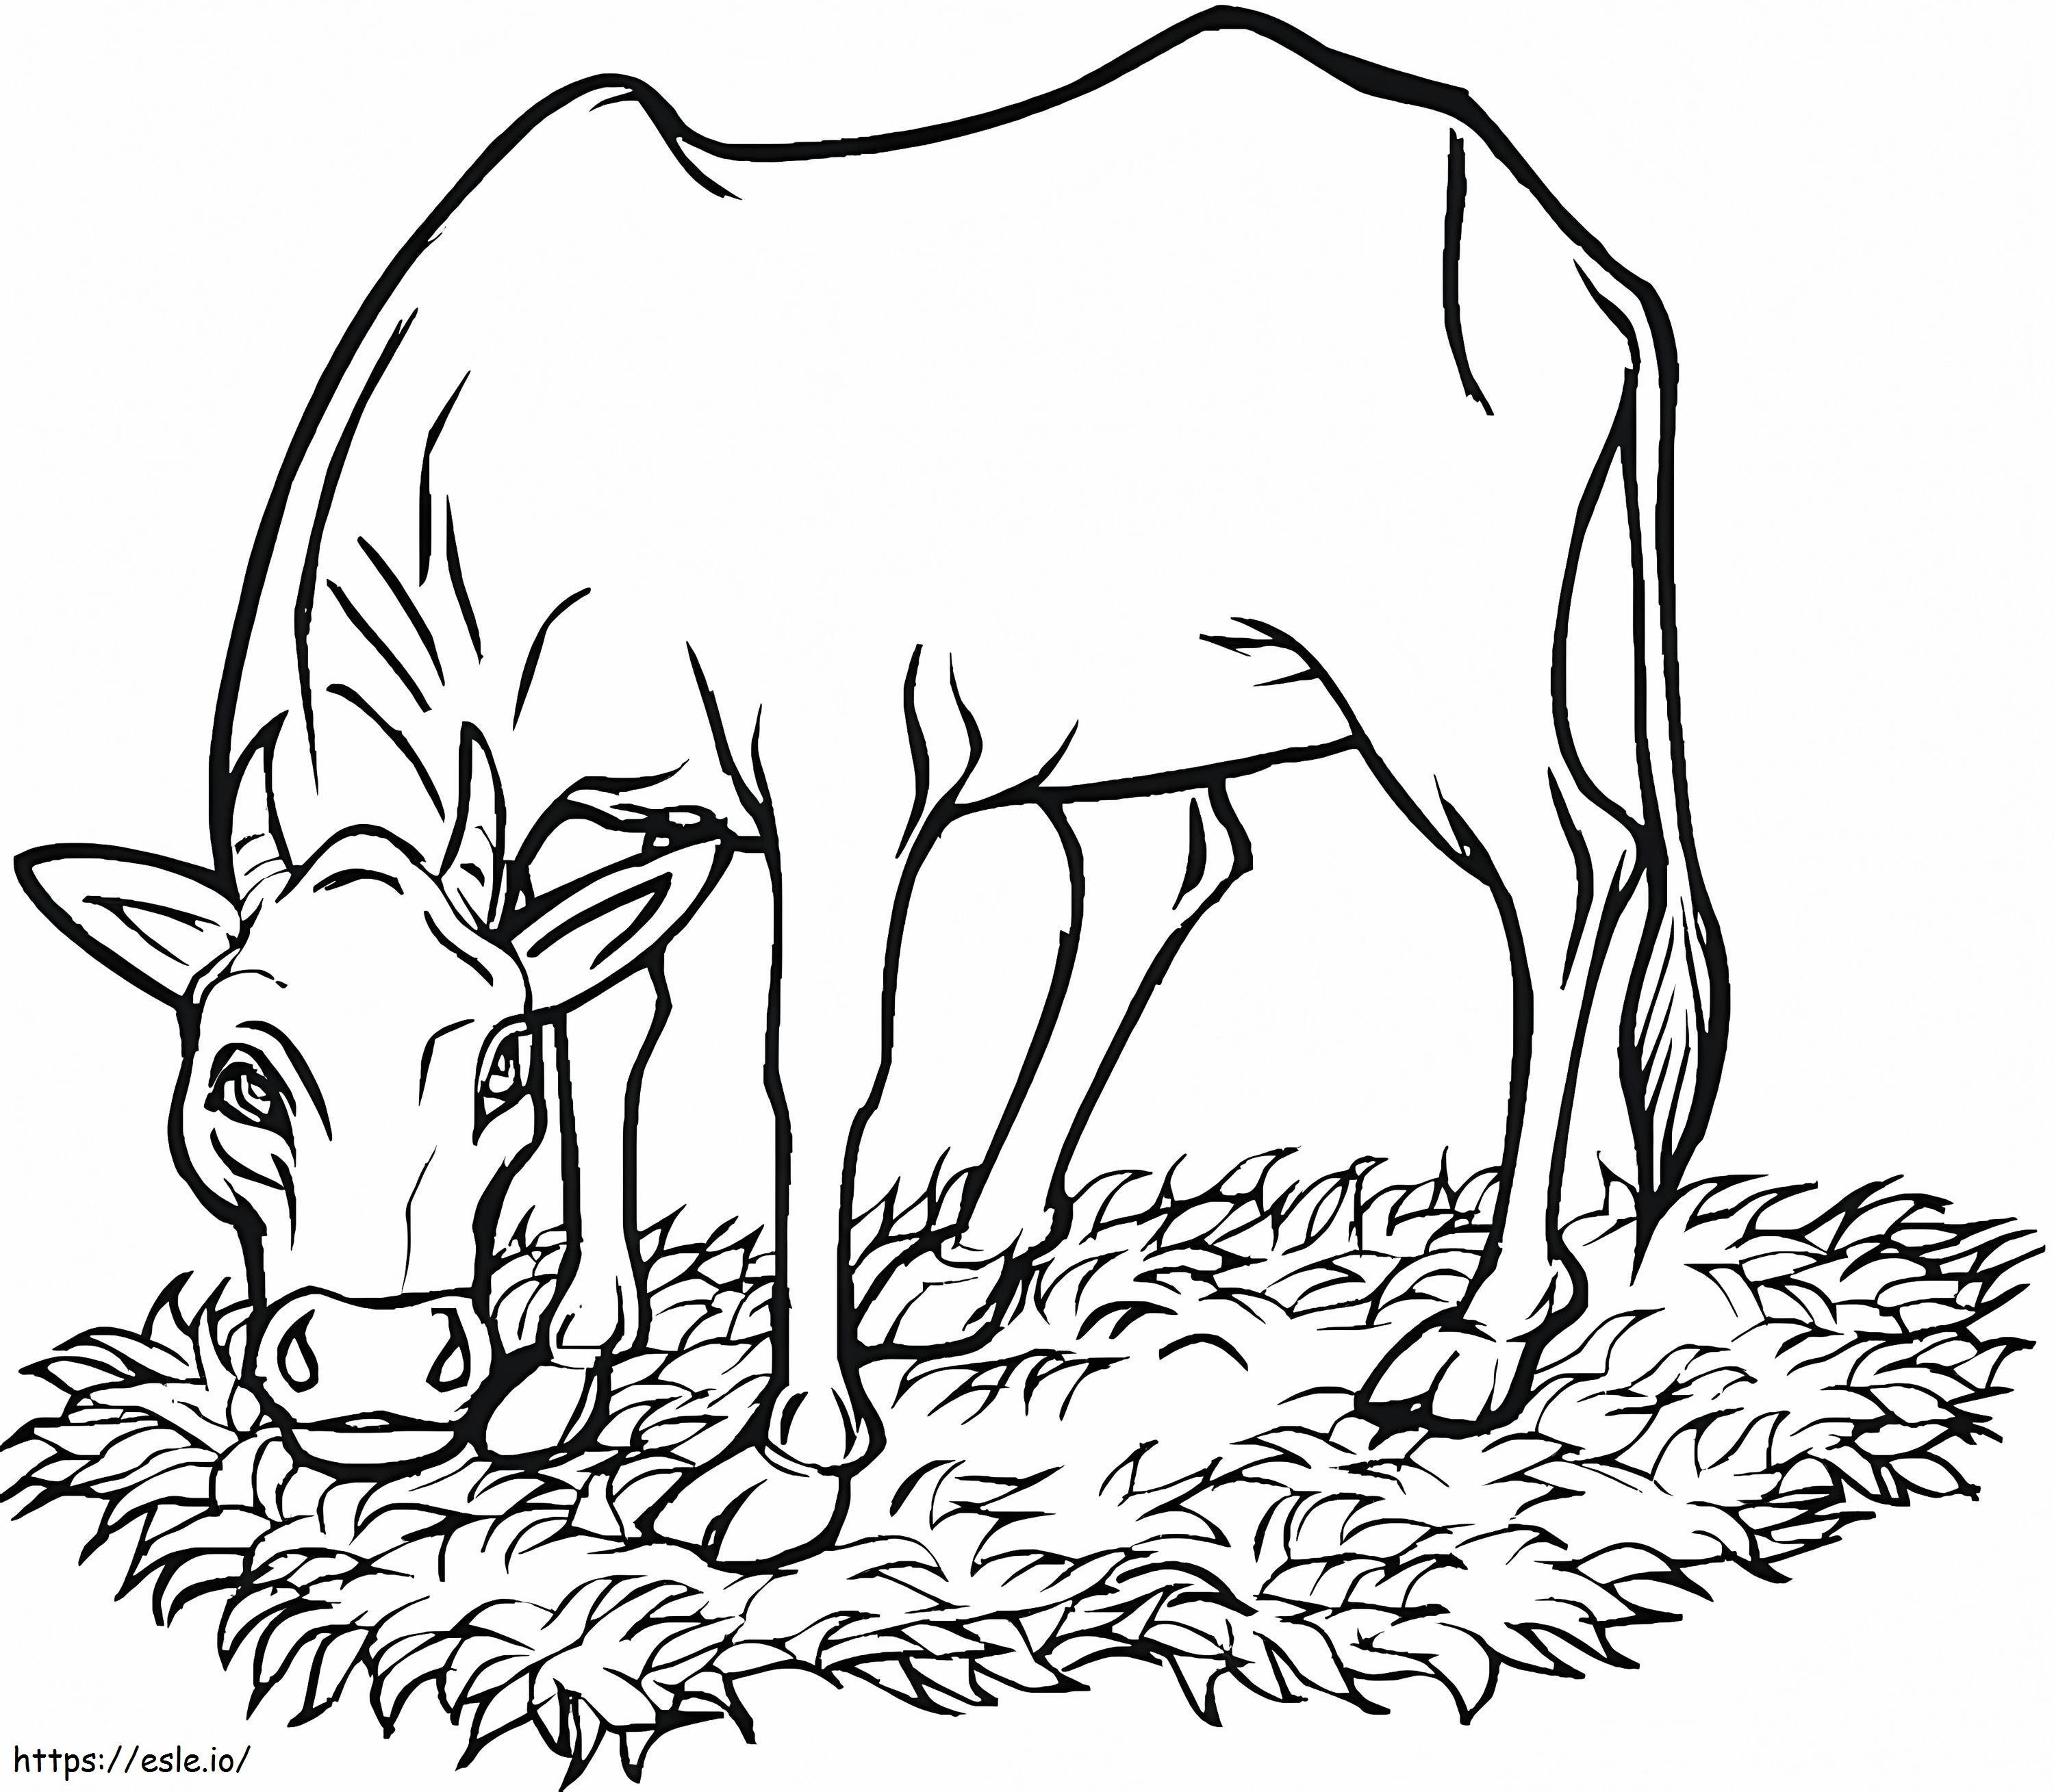 Kuh frisst Gras ausmalbilder